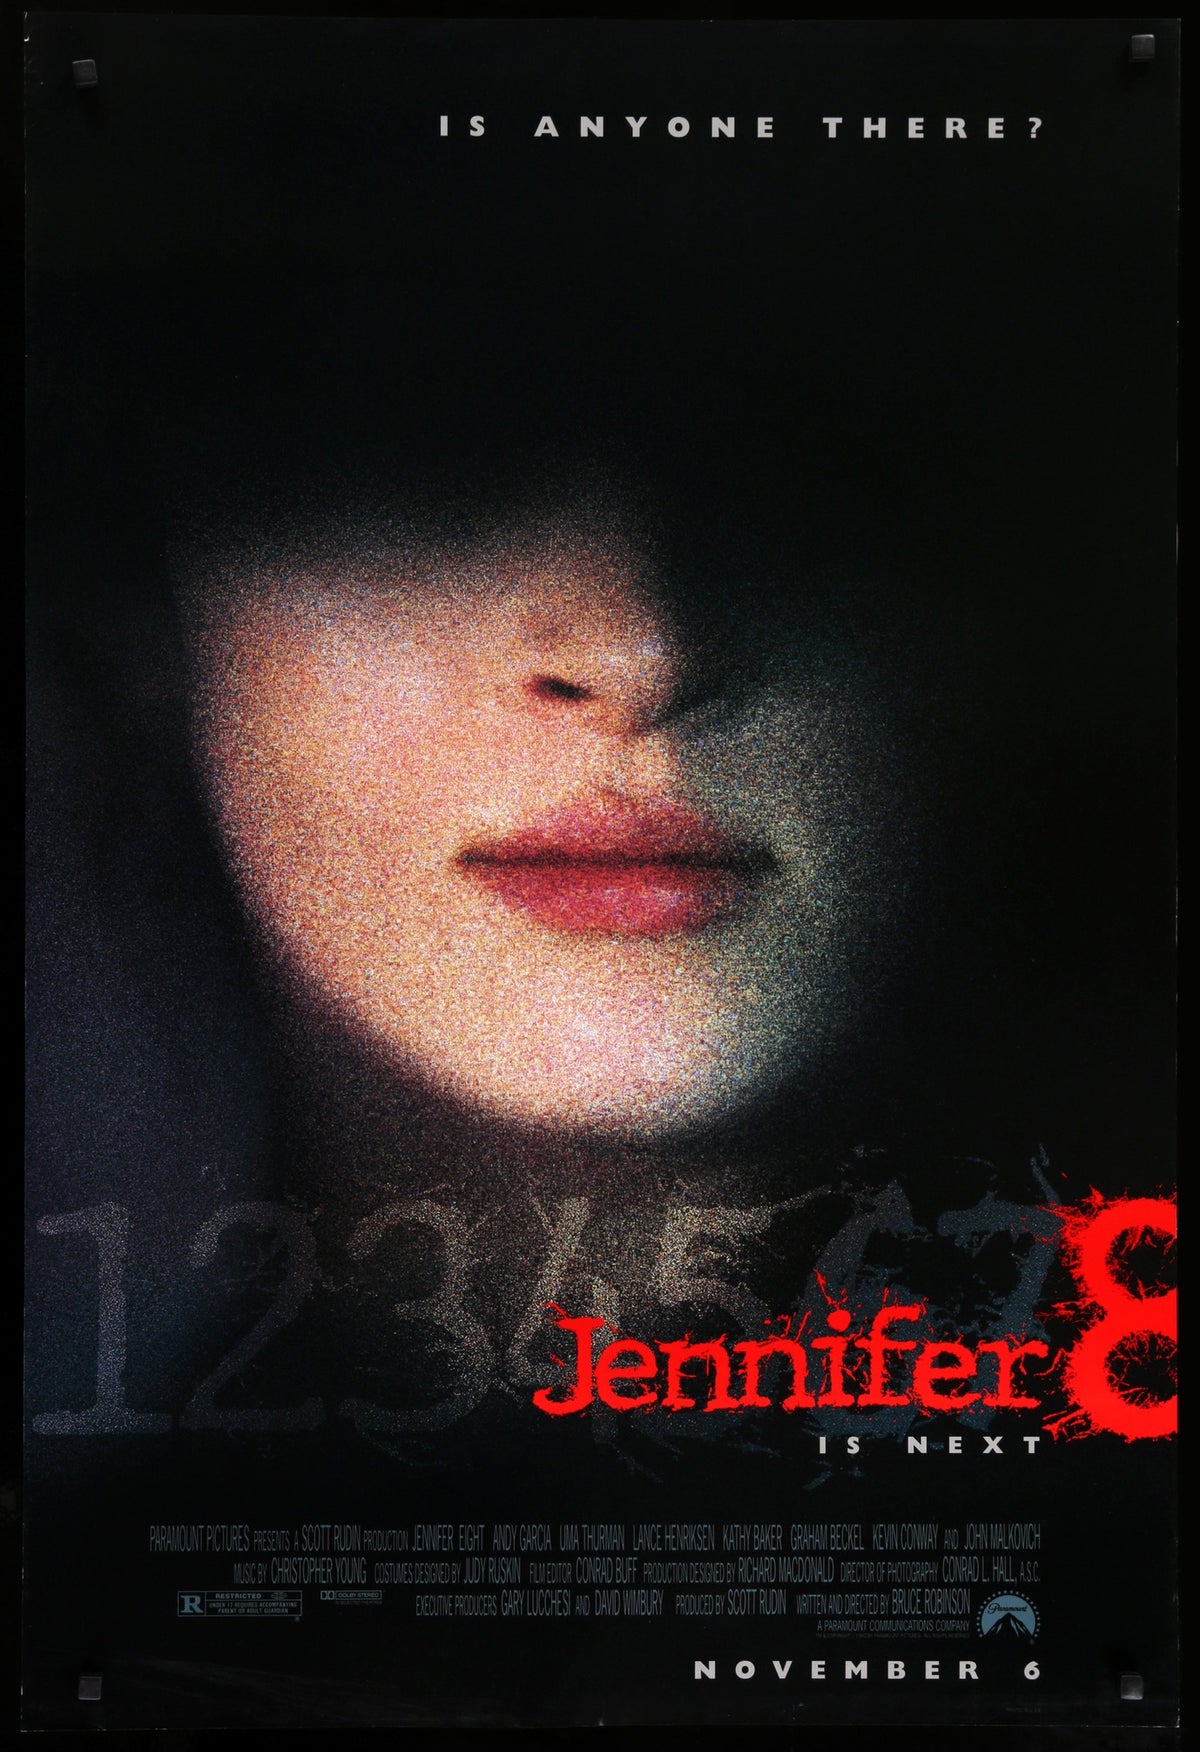 Jennifer 8 (1992) original movie poster for sale at Original Film Art